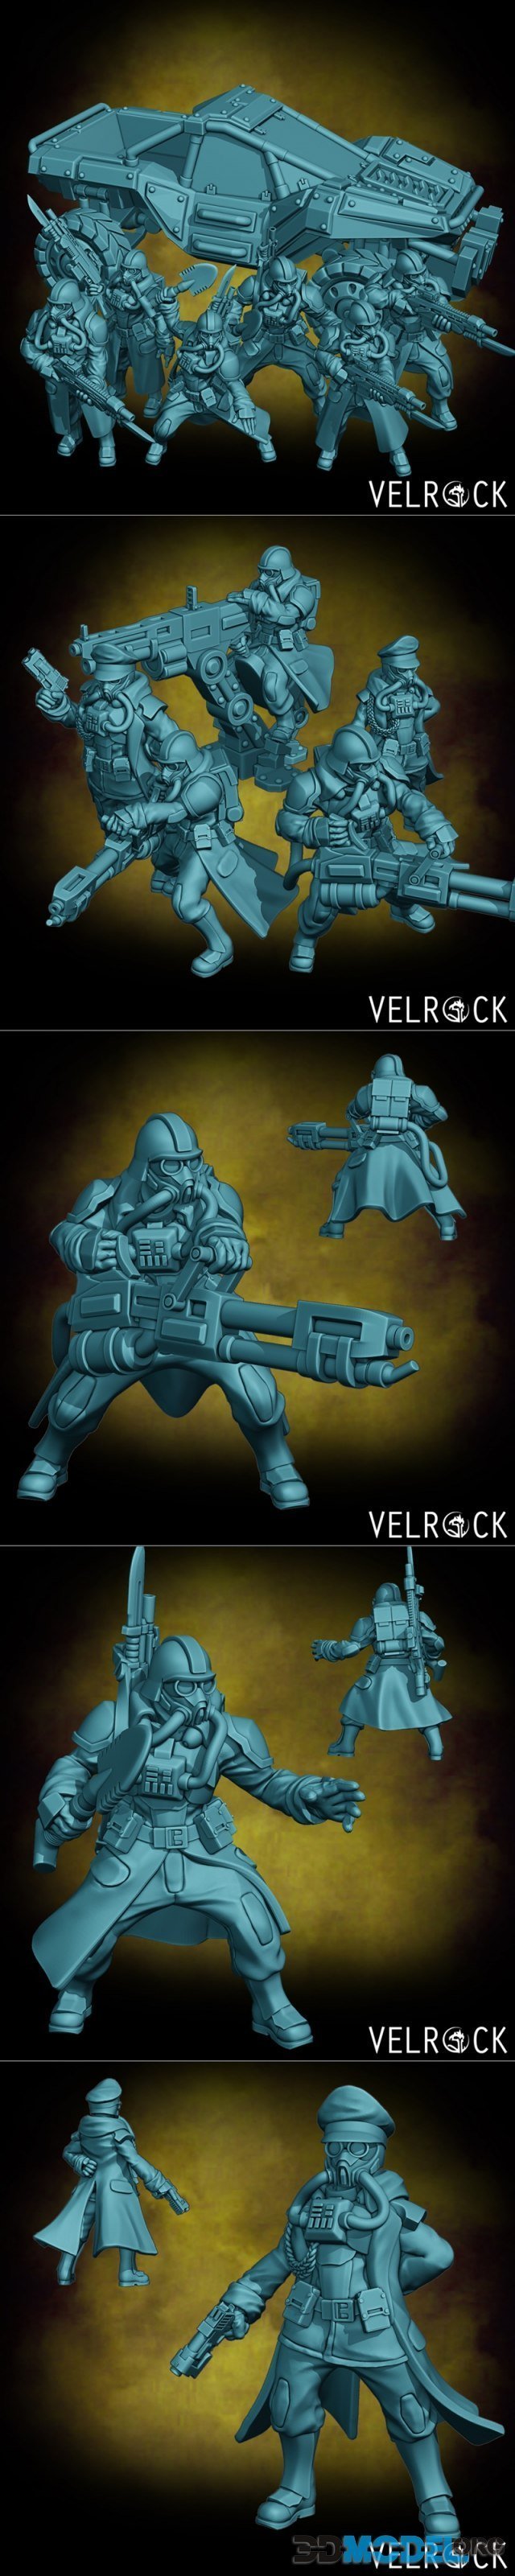 Velrock Art - Tempest Guardsmen Trenchers 1-2 and Mudrunner – Printable